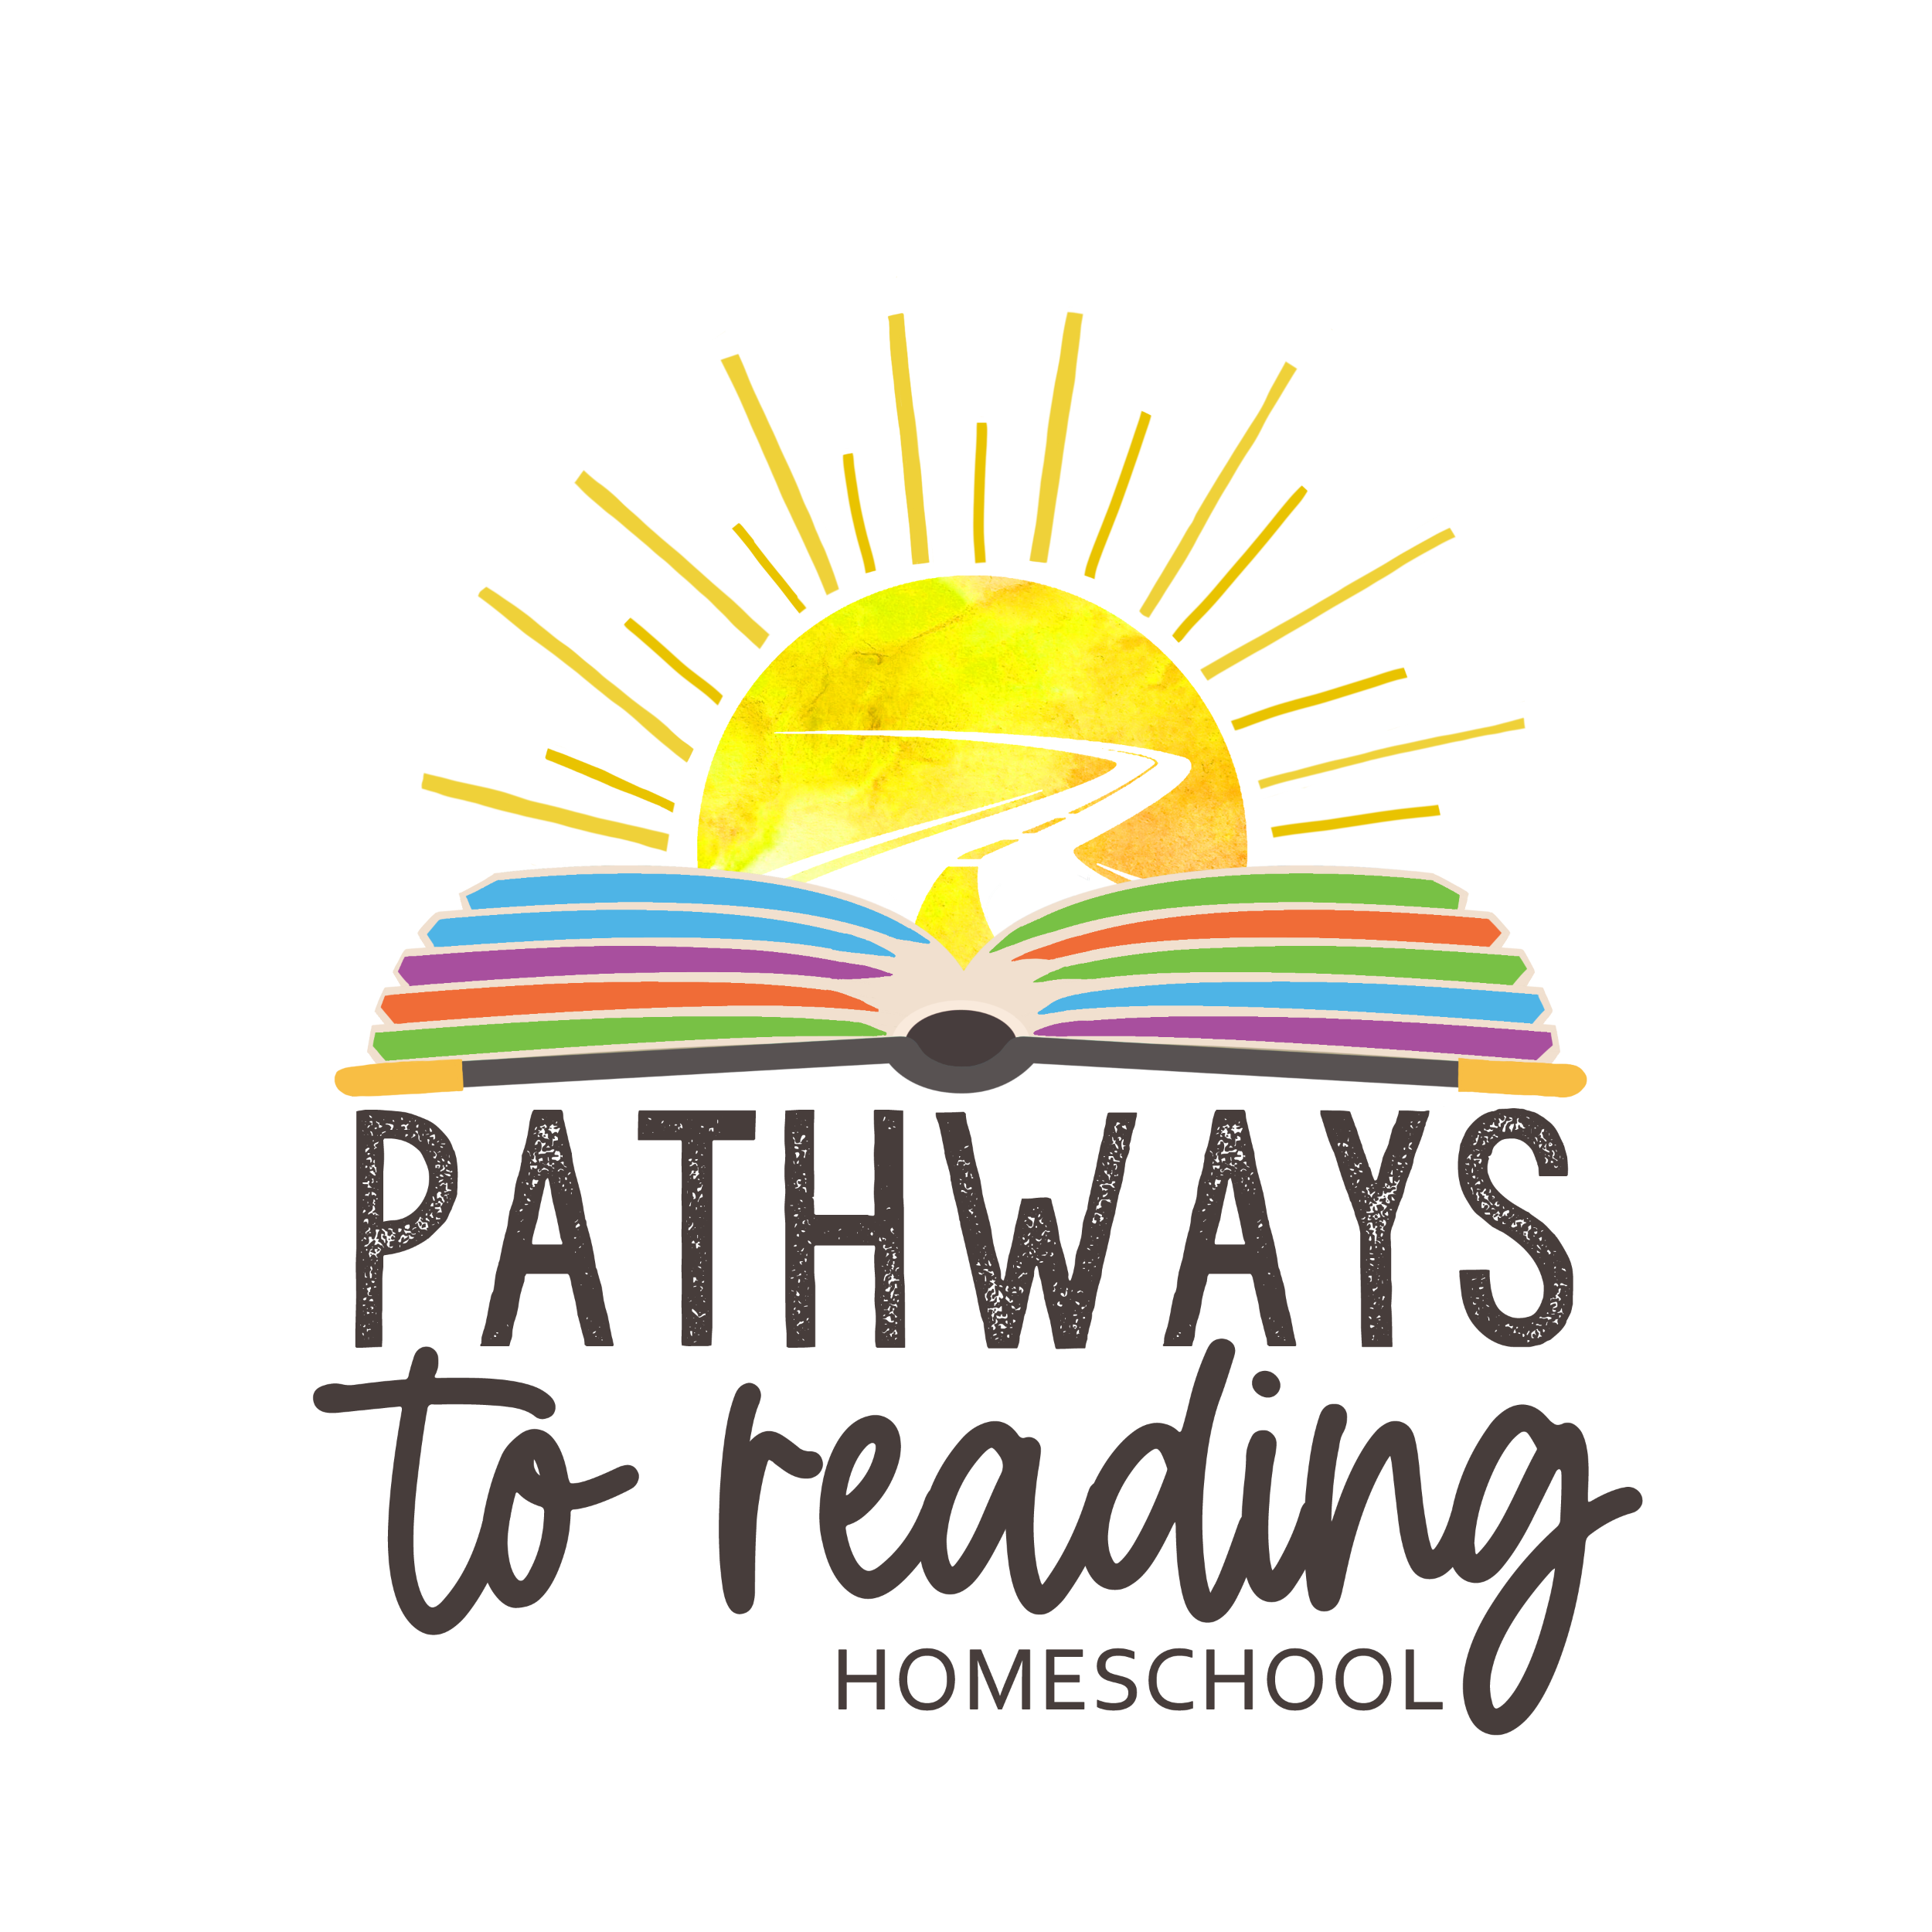 Pathways to Reading Homeschool logo